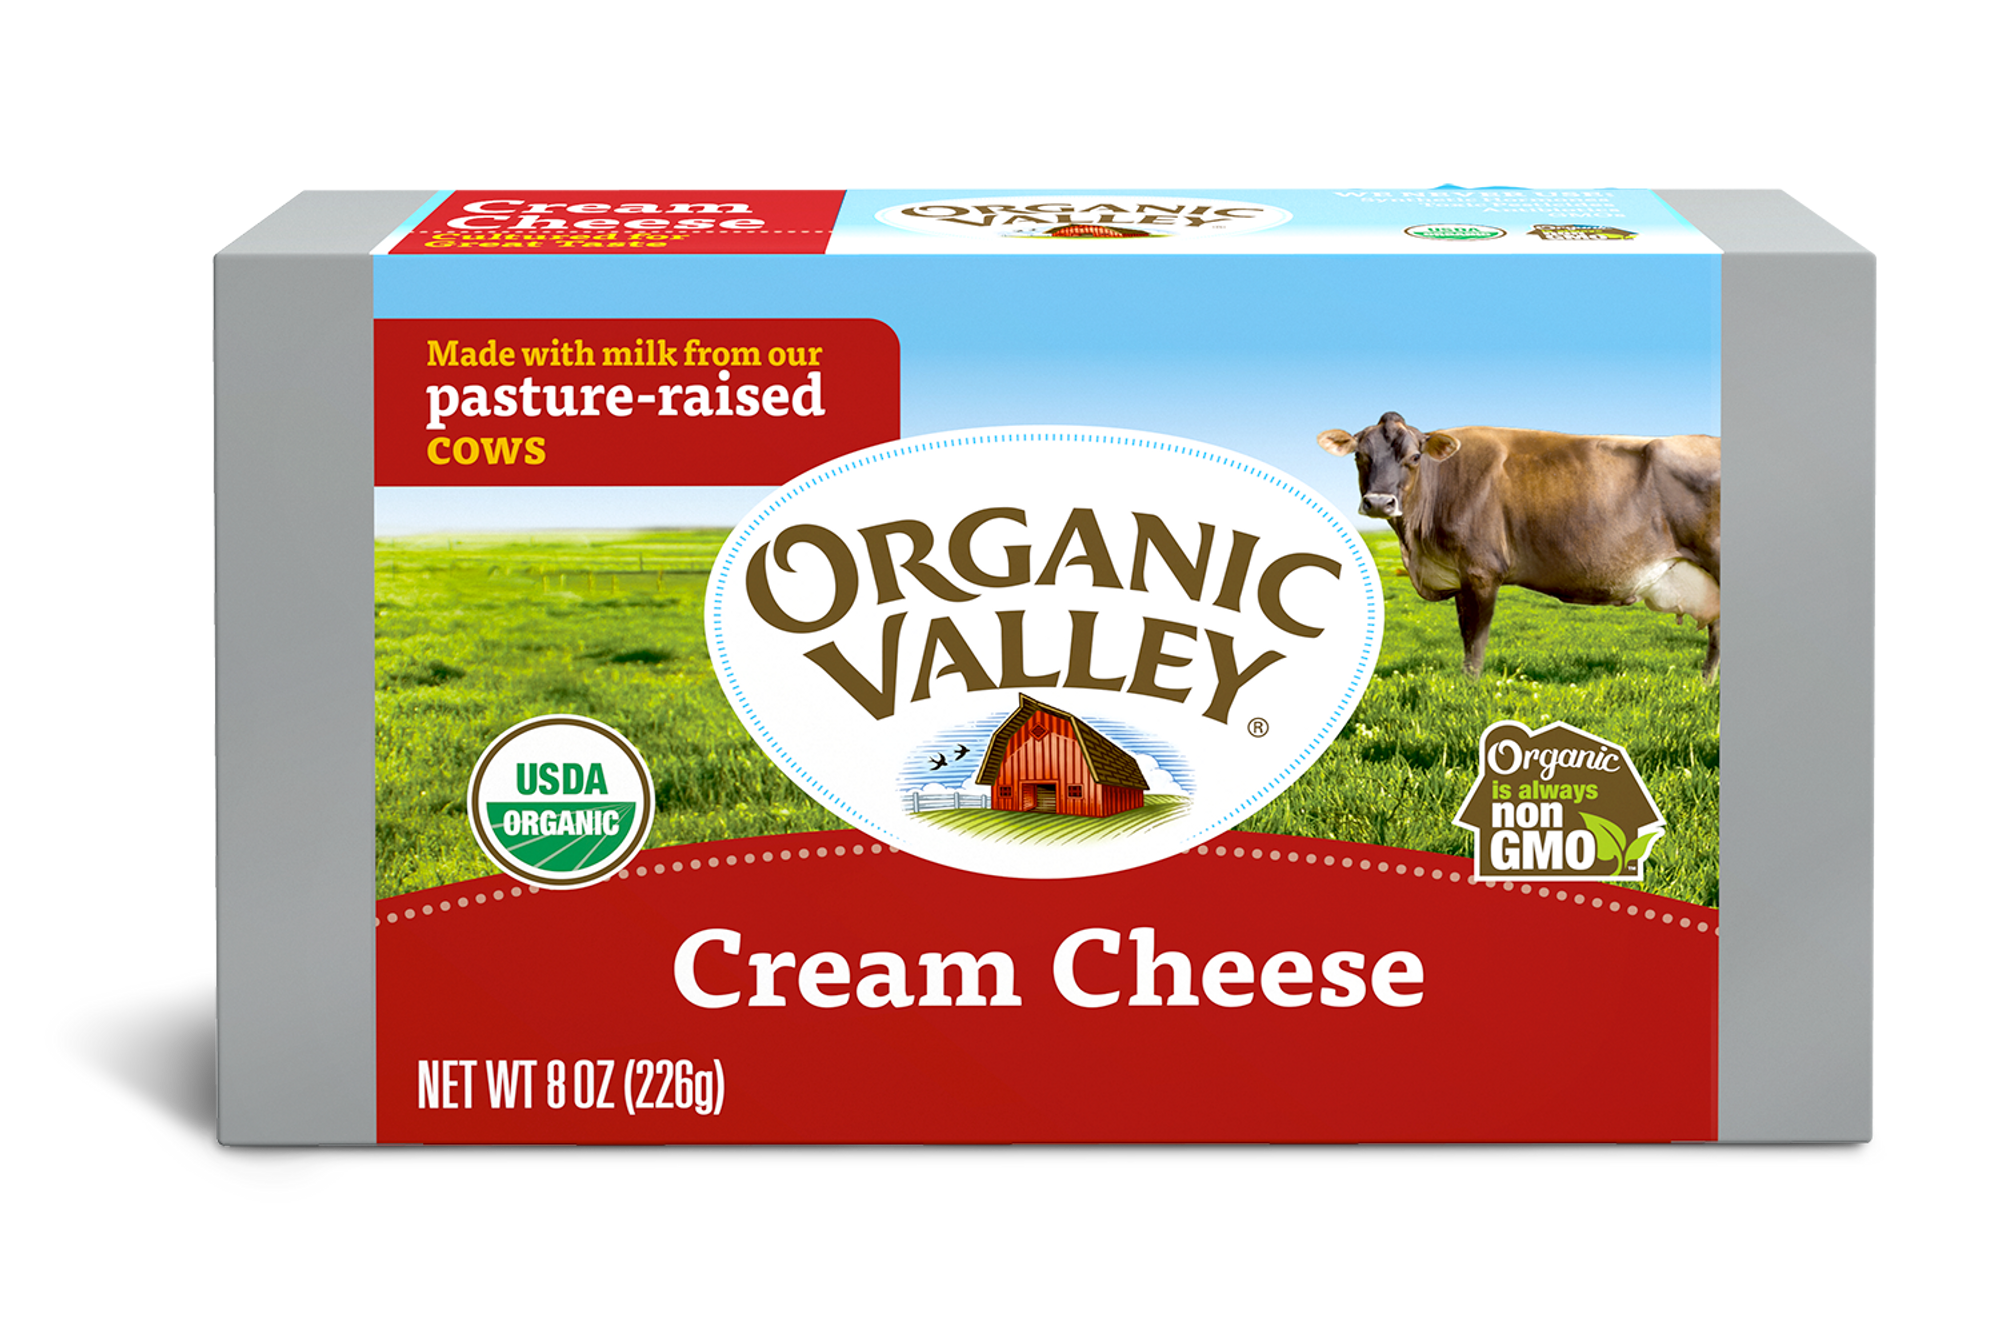 Organic Valley French Vanilla Soy Creamer, 1 pt - Pick 'n Save